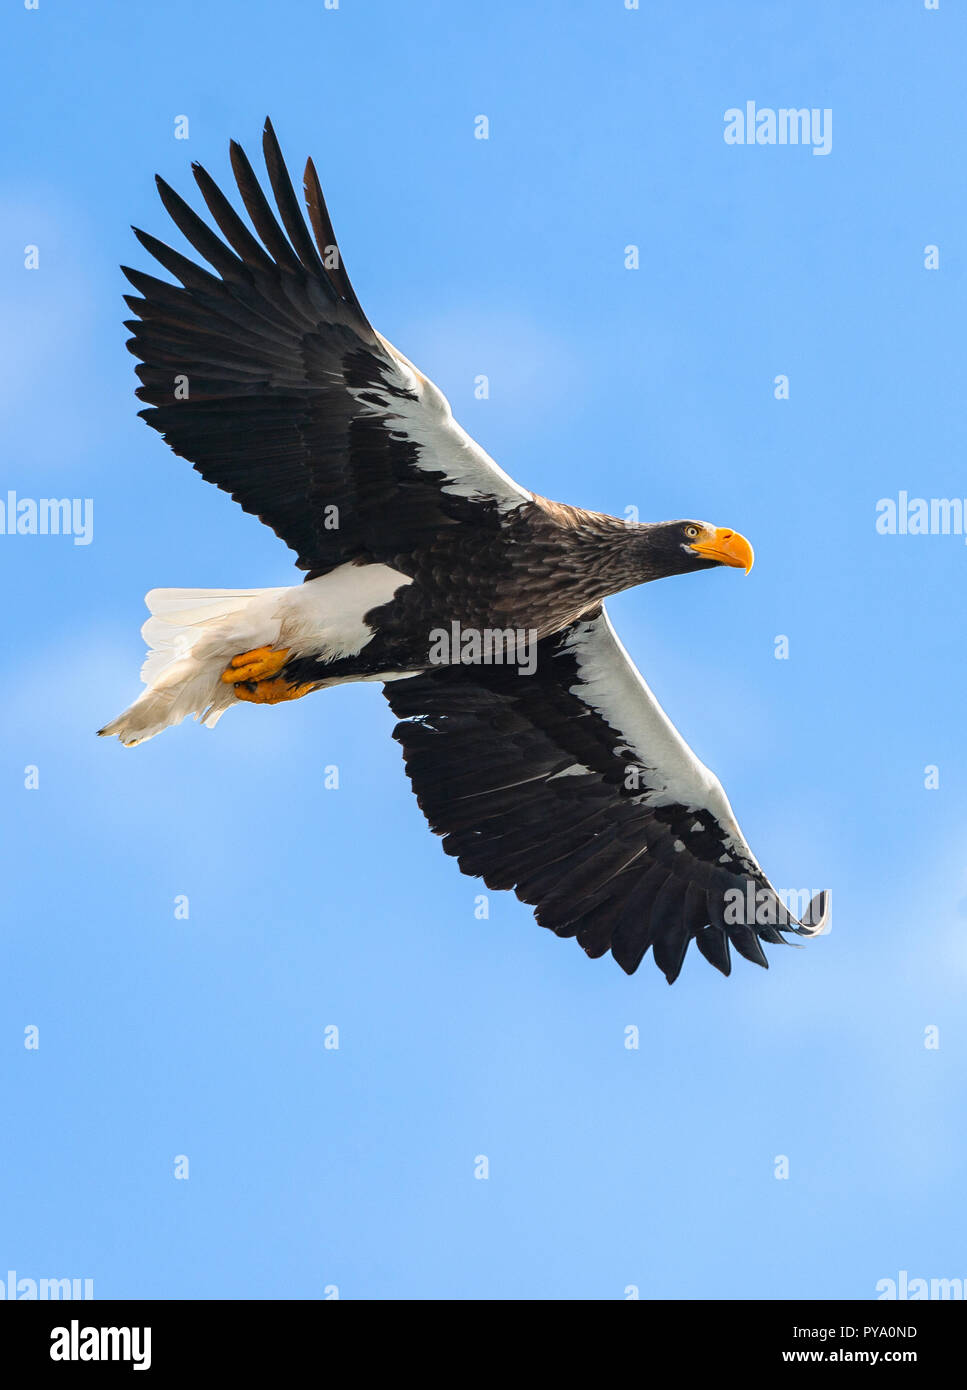 Adult Steller's sea eagle in flight. Scientific name: Haliaeetus pelagicus. Blue sky background. Stock Photo